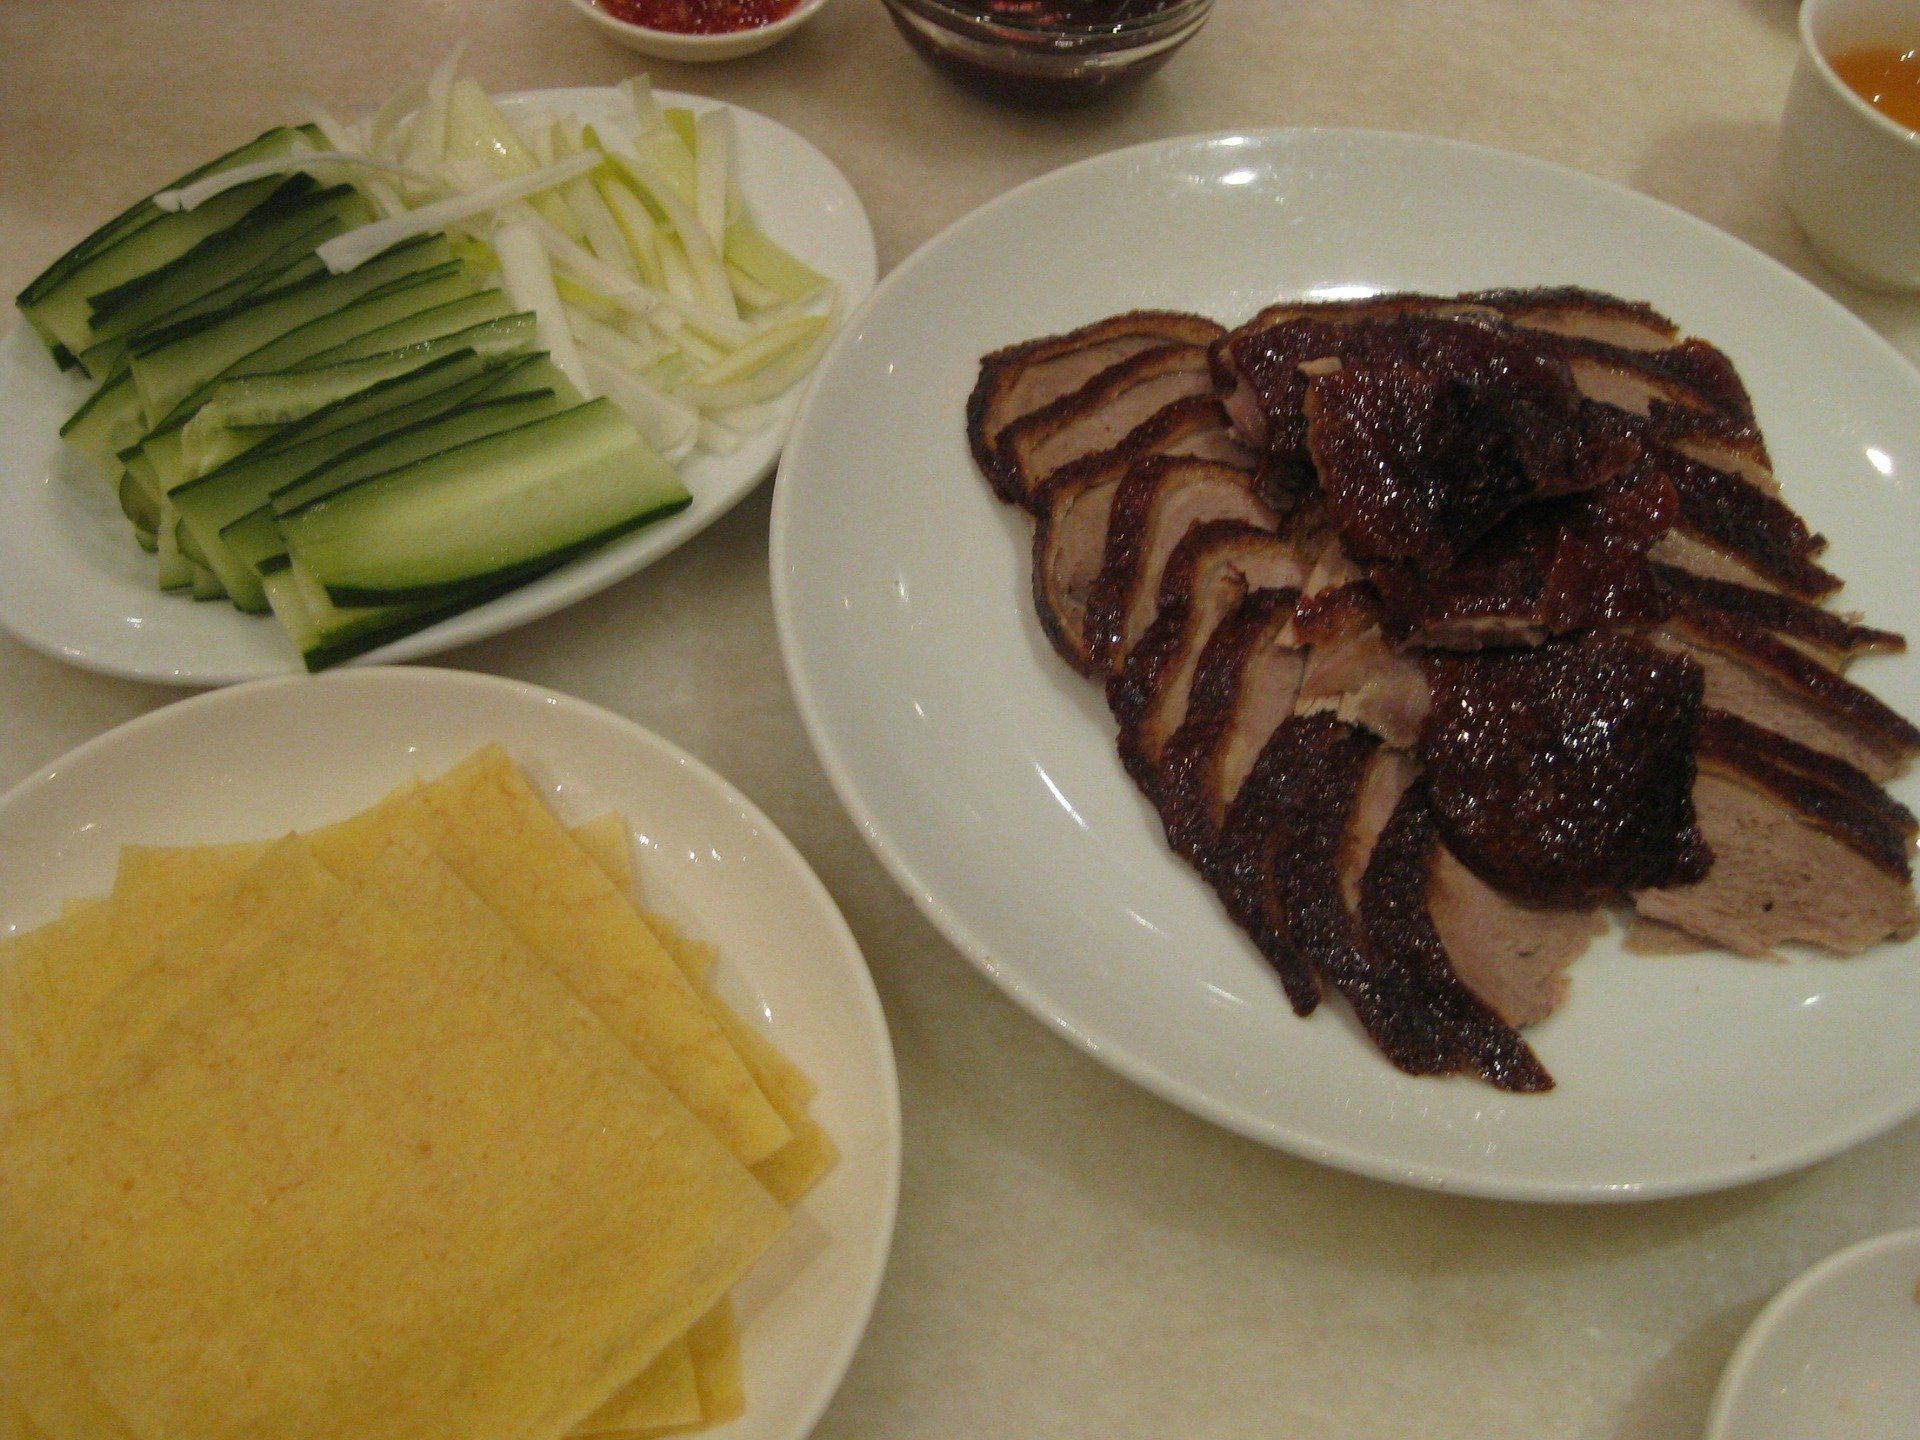 Peking roasted duck with pancakes, cucumber, onion, sauce.